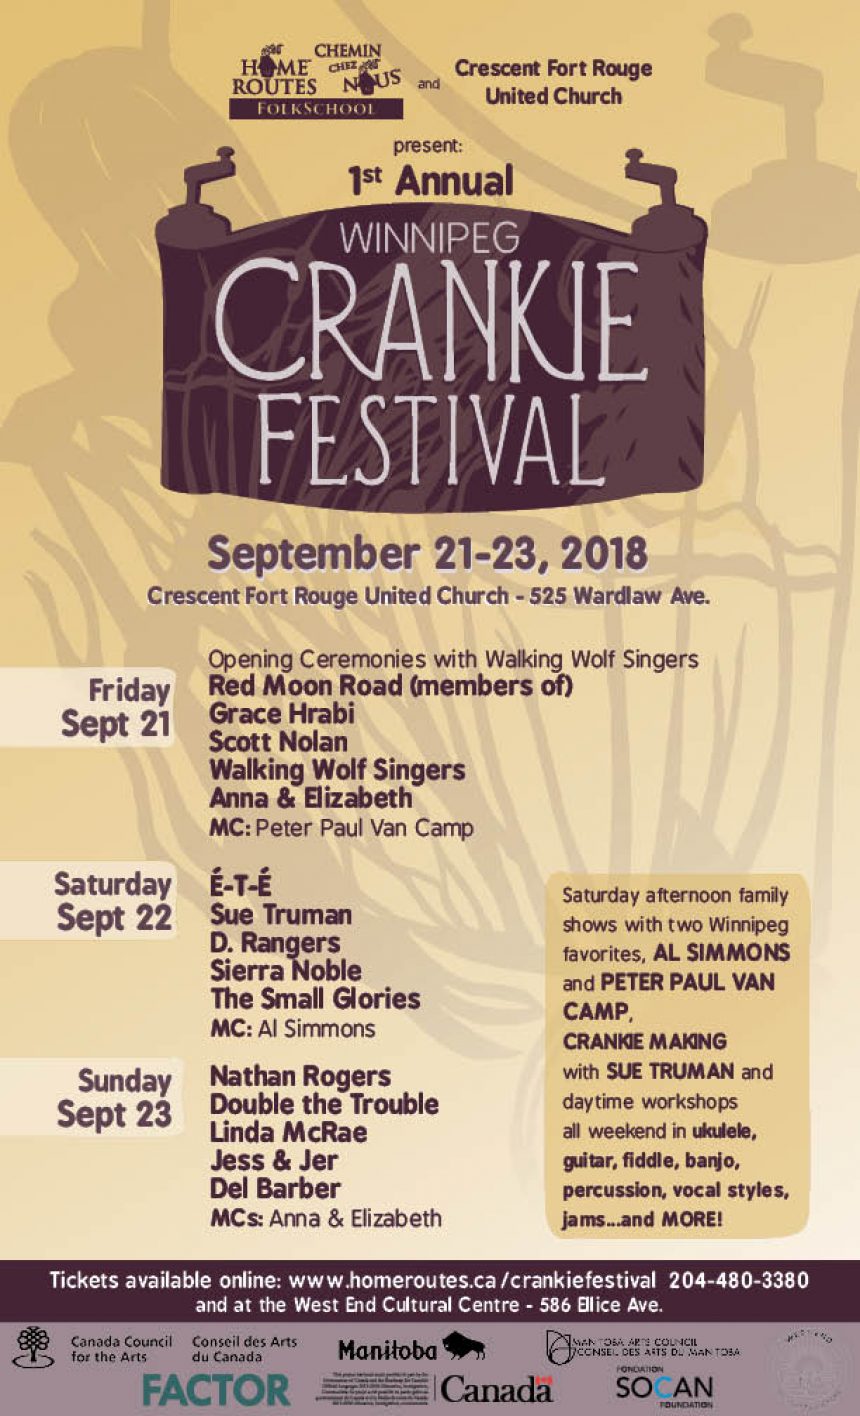 First Annual Winipeg Crankie Festival